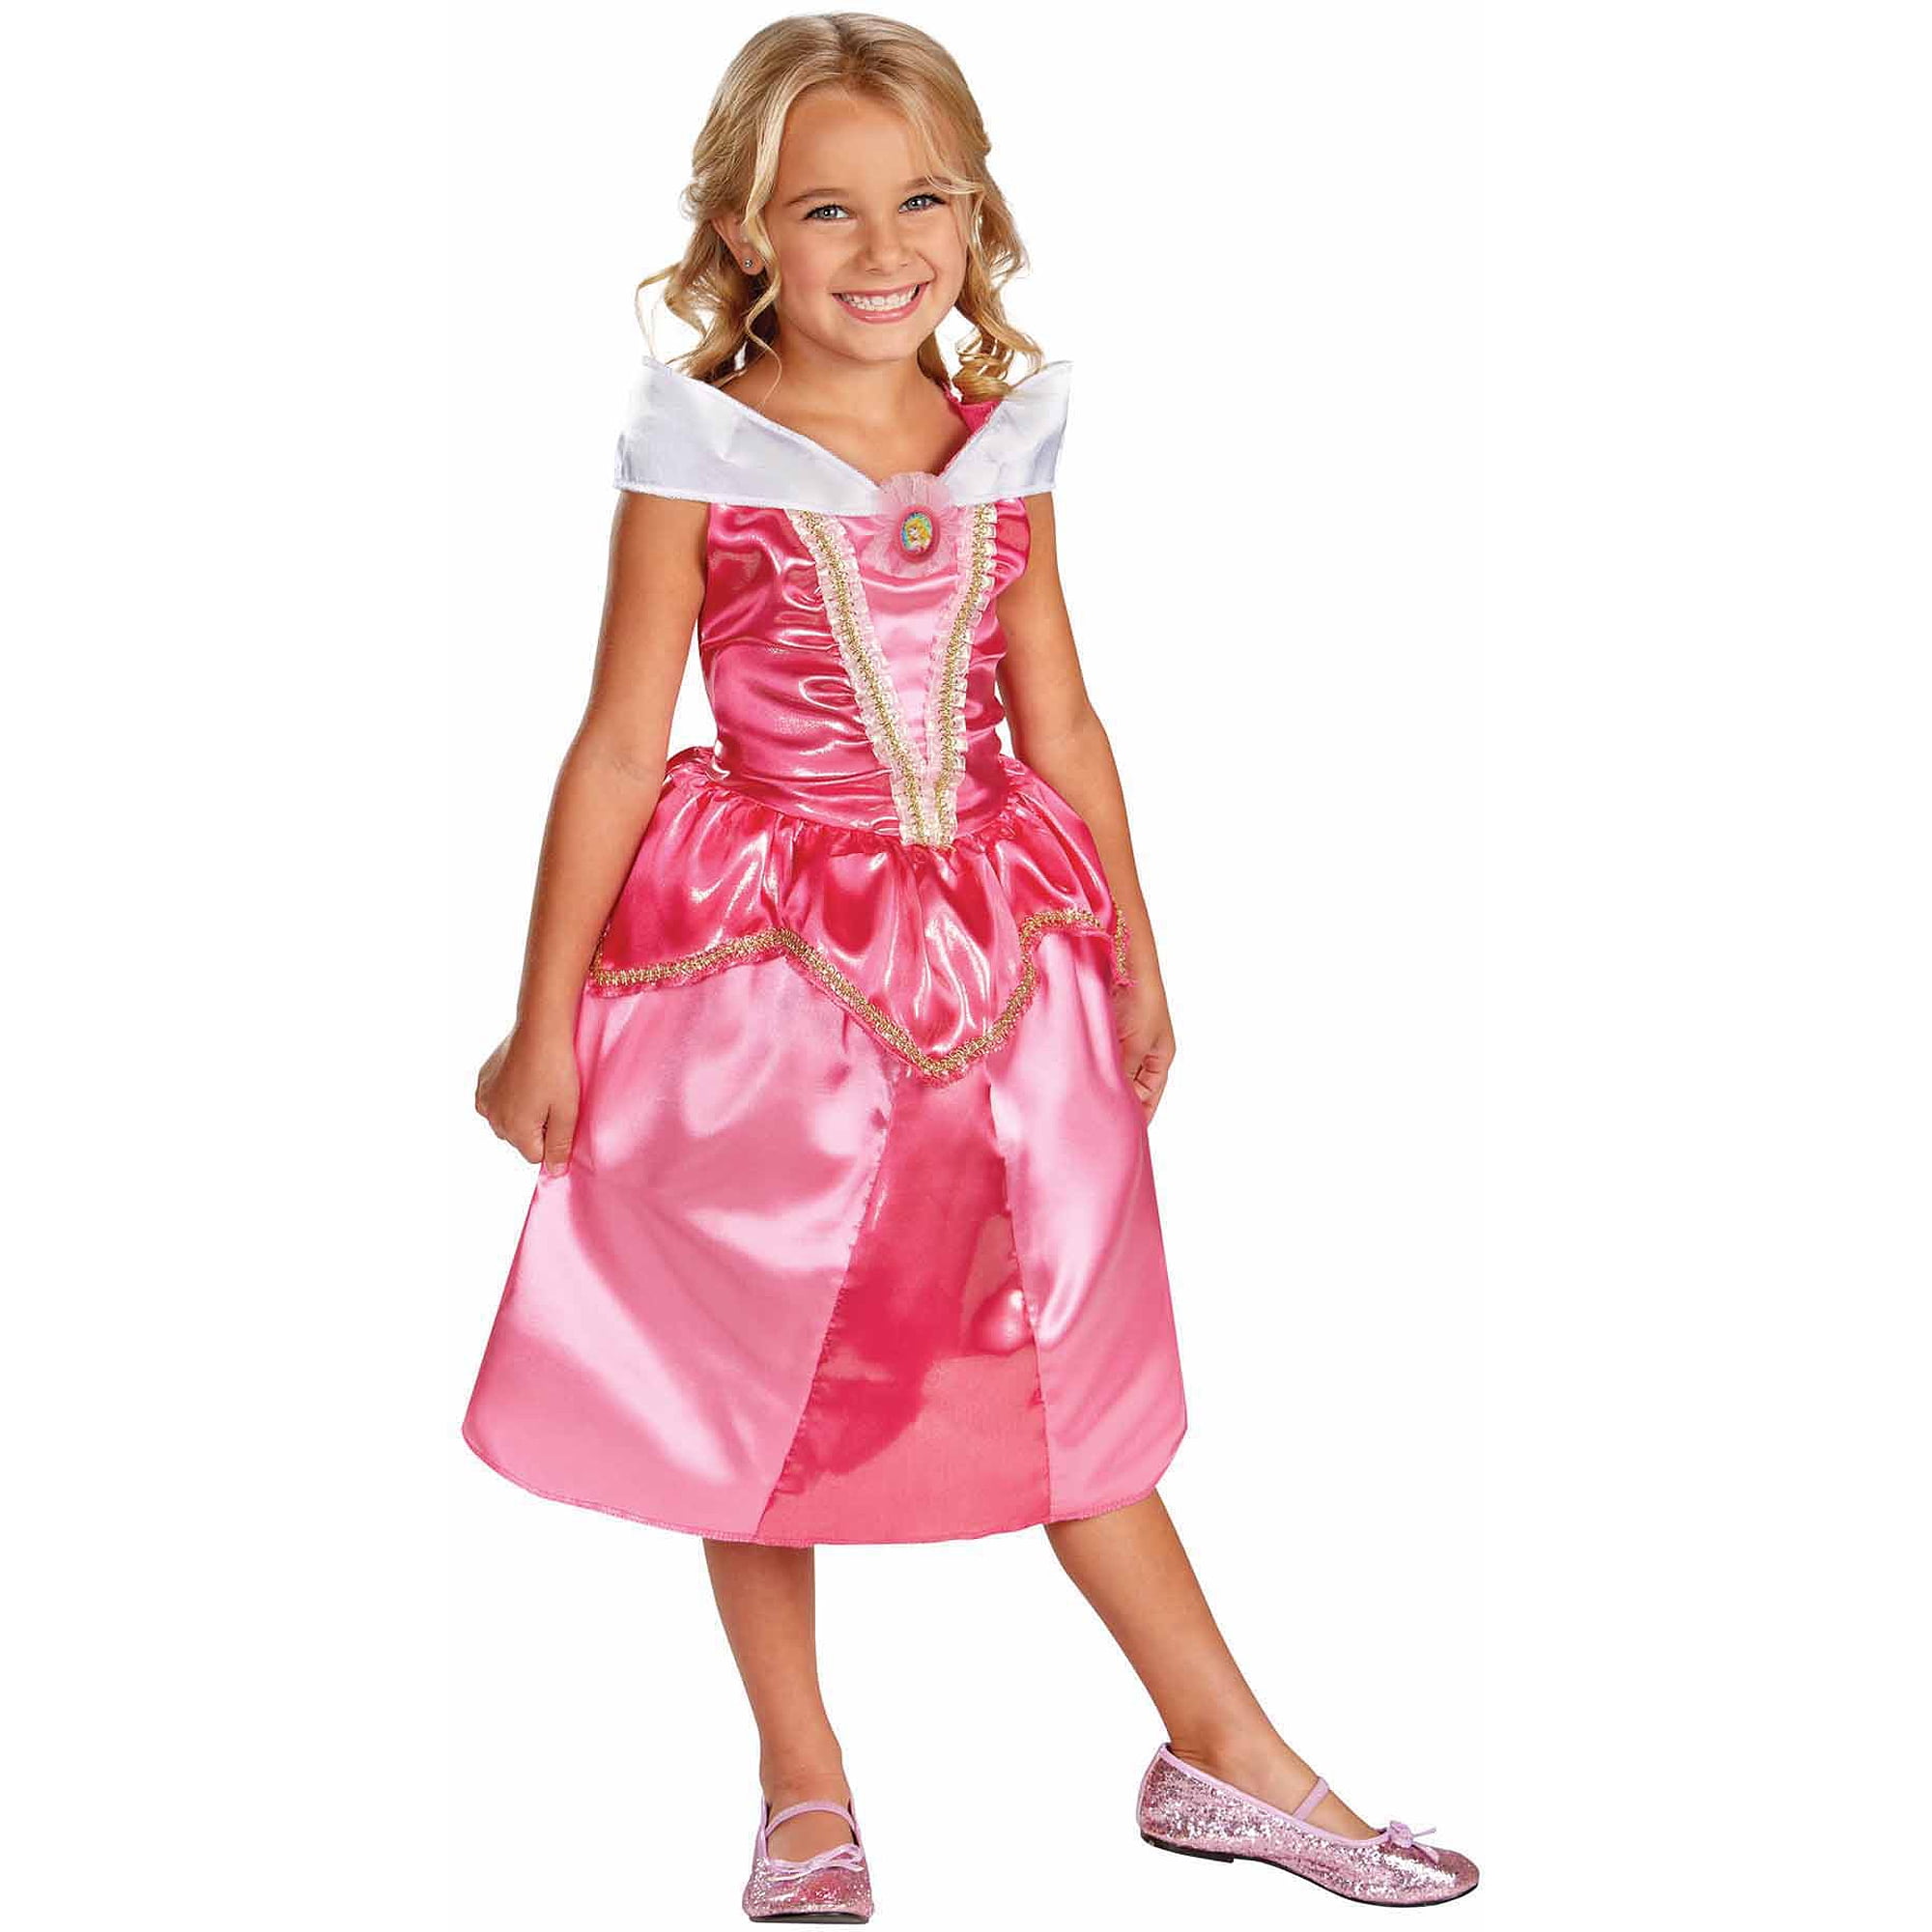 Aurora Costume Kids Disney Princess Sleeping Beauty Halloween Fancy Dress 